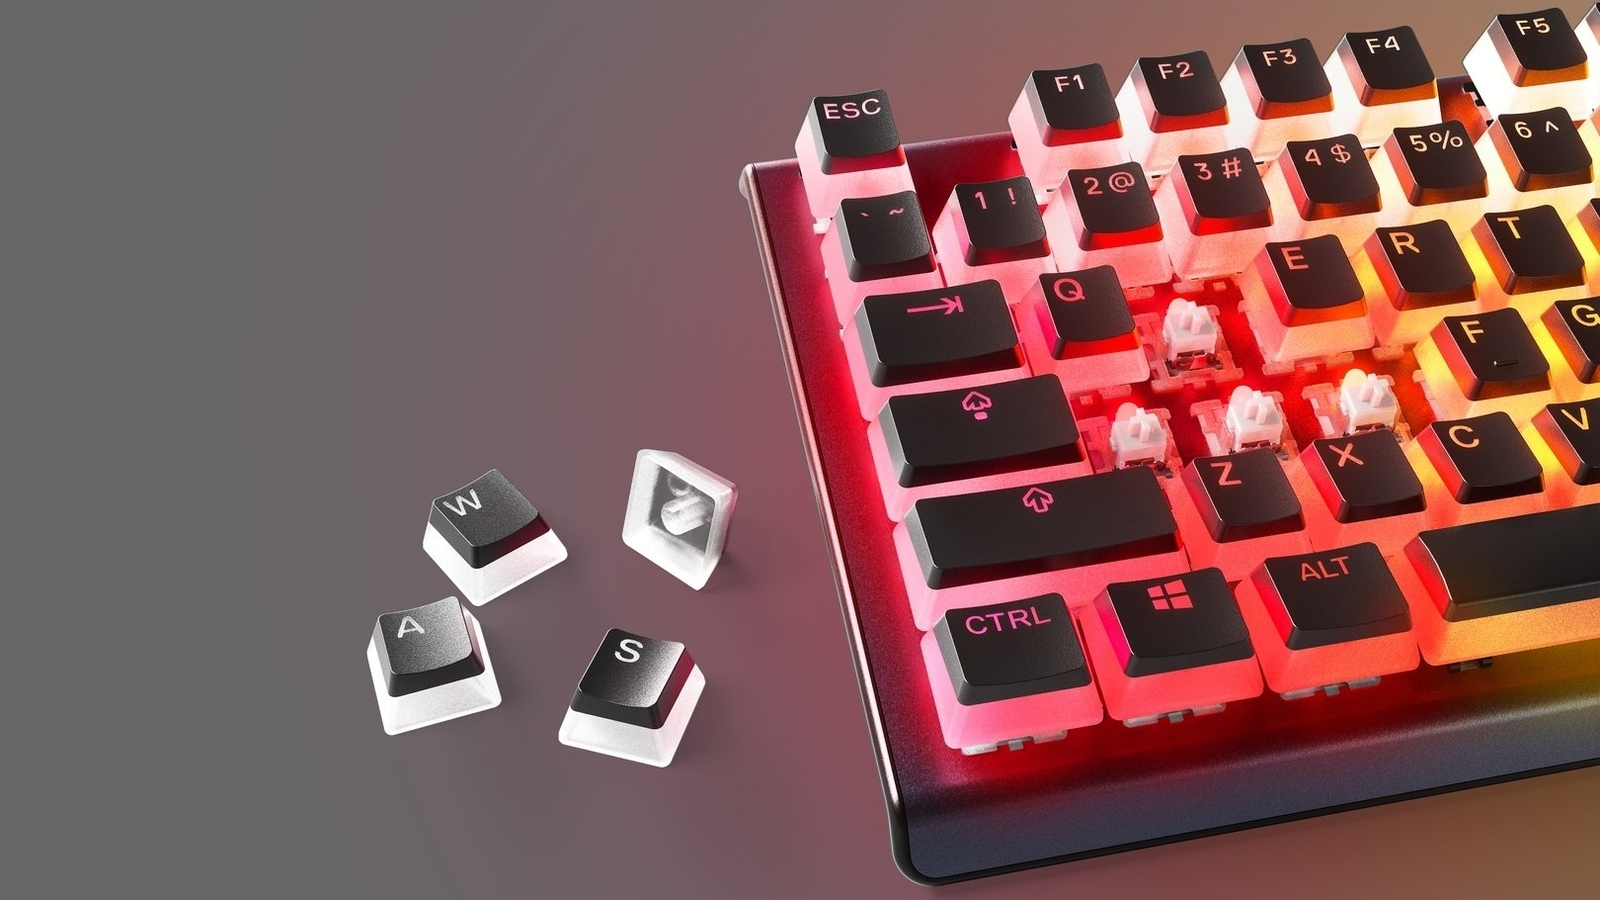 10 Best Gaming Keyboards of 2023 - Reviewed